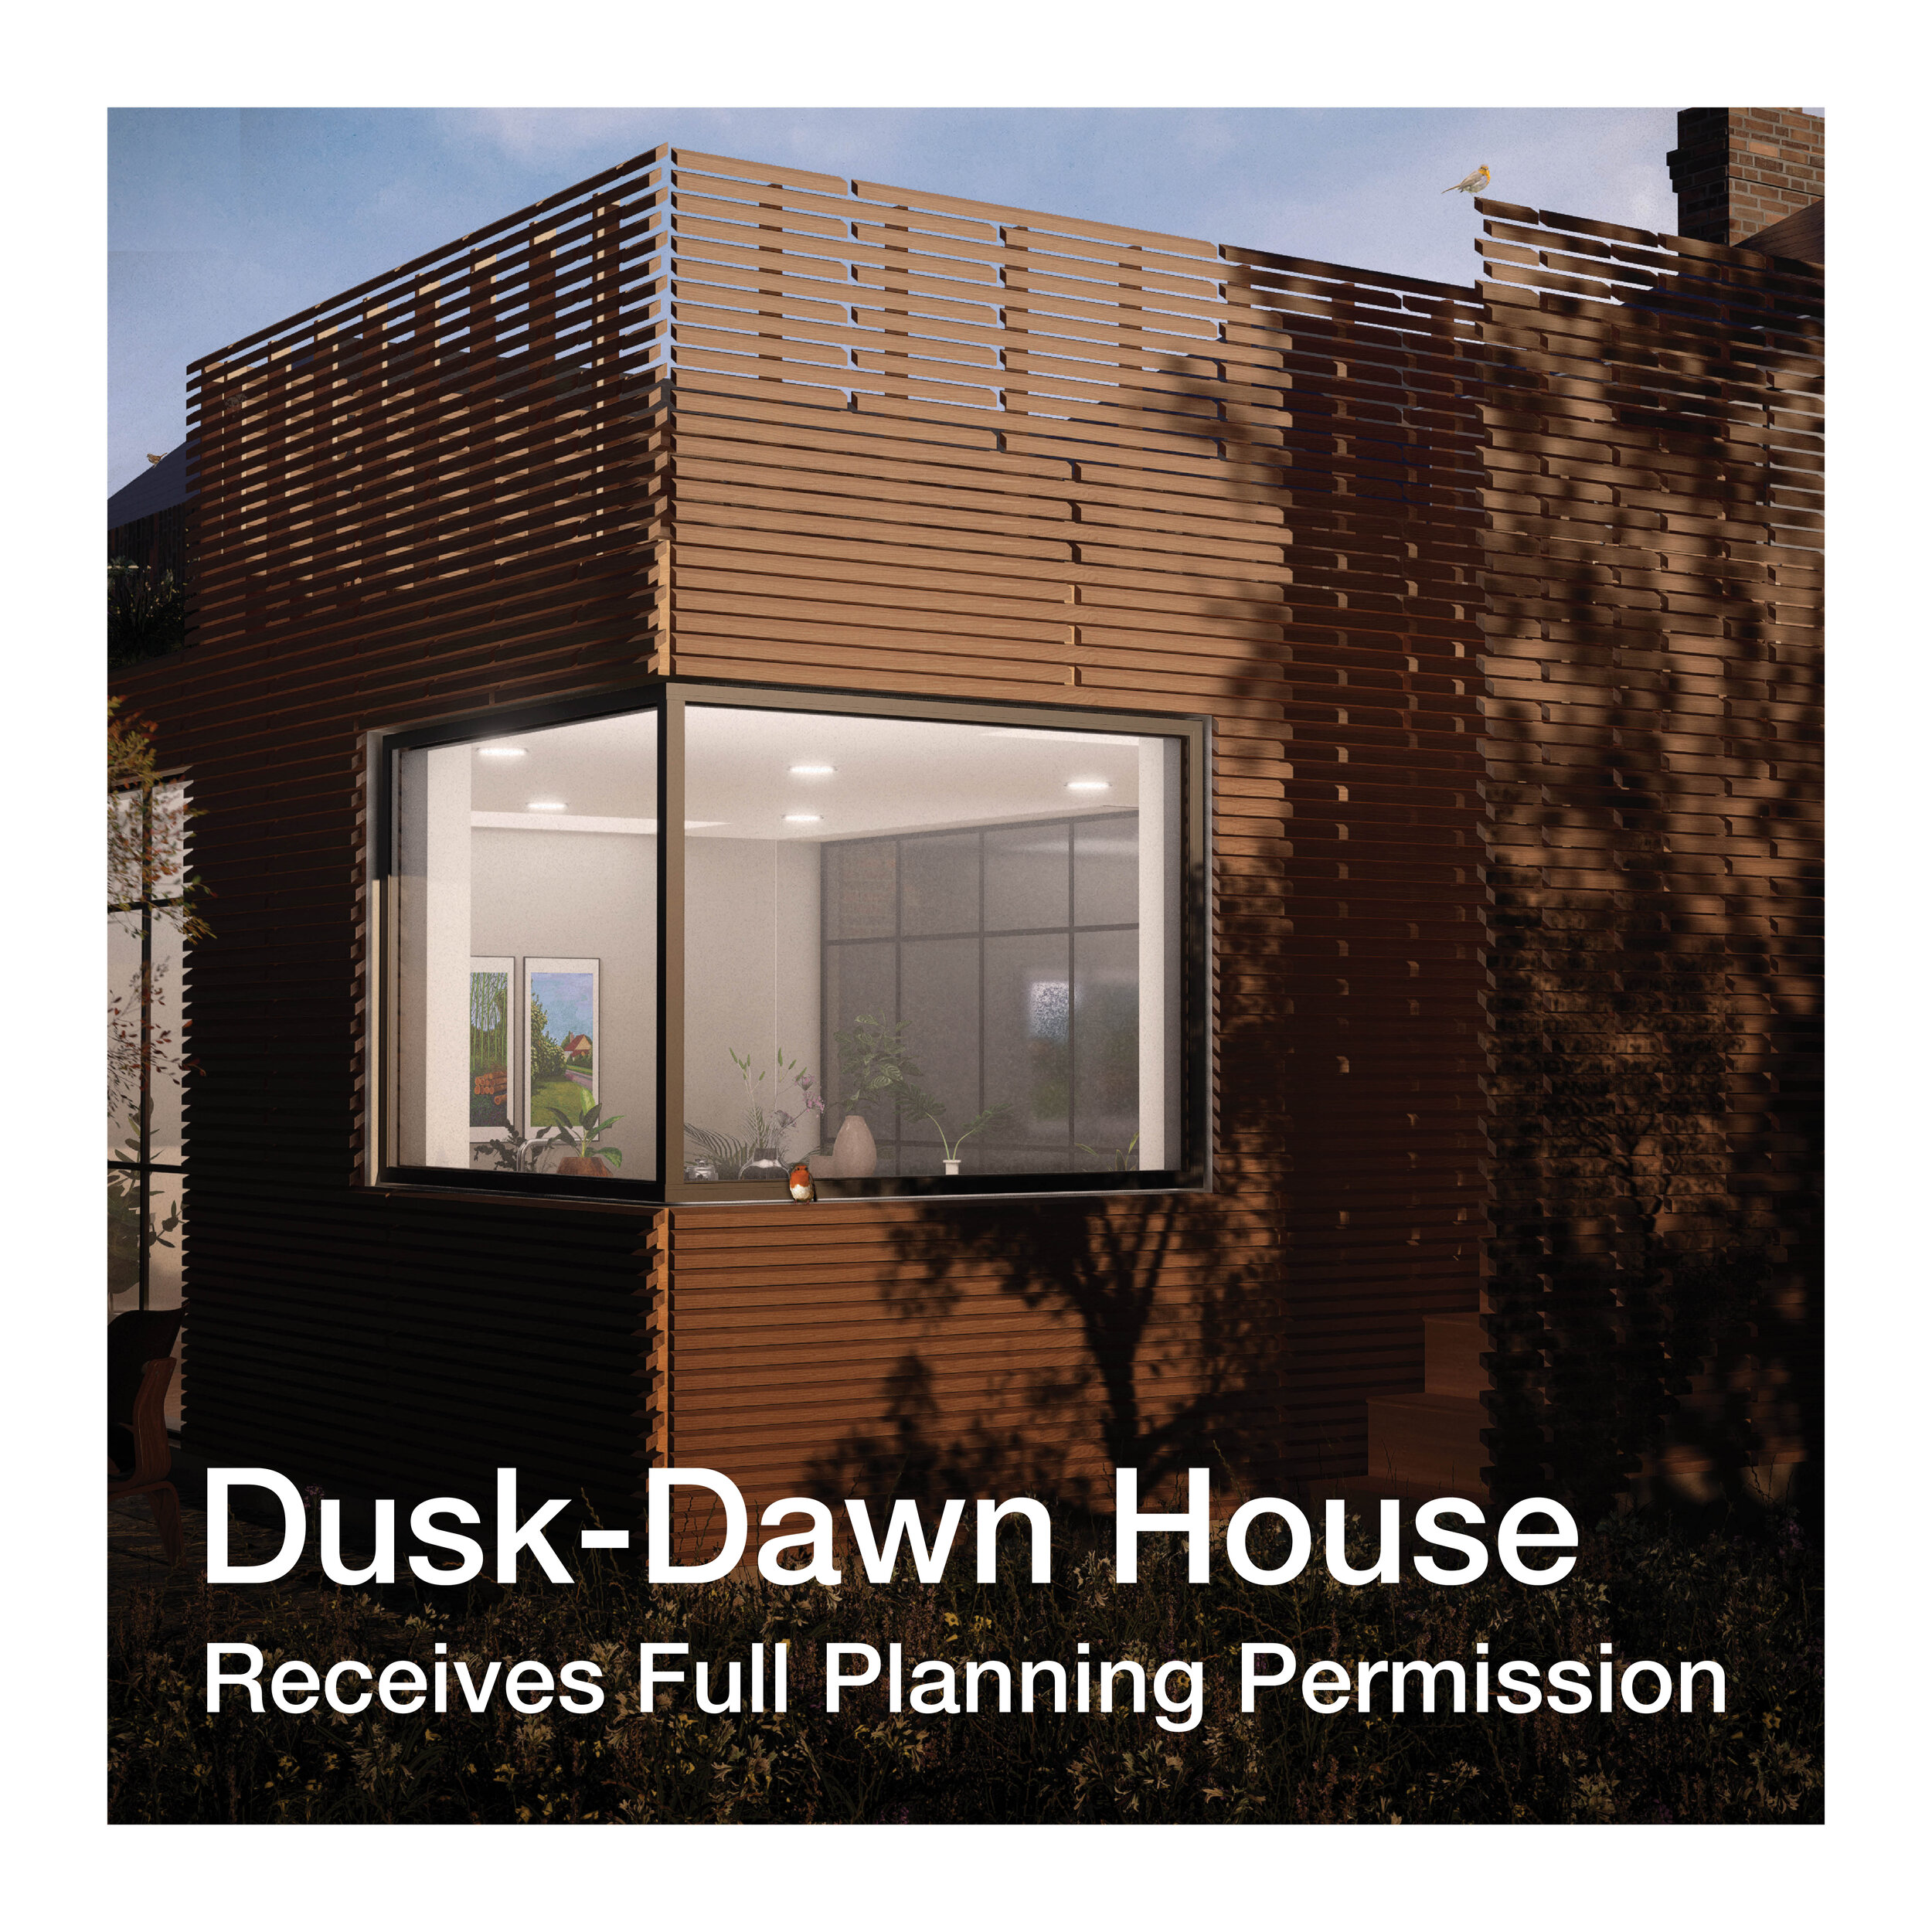 Dusk-Dawn House 4_Receives Full Planning Permission_Sustainable Cottingham Architects_Samuel Kendall Associates